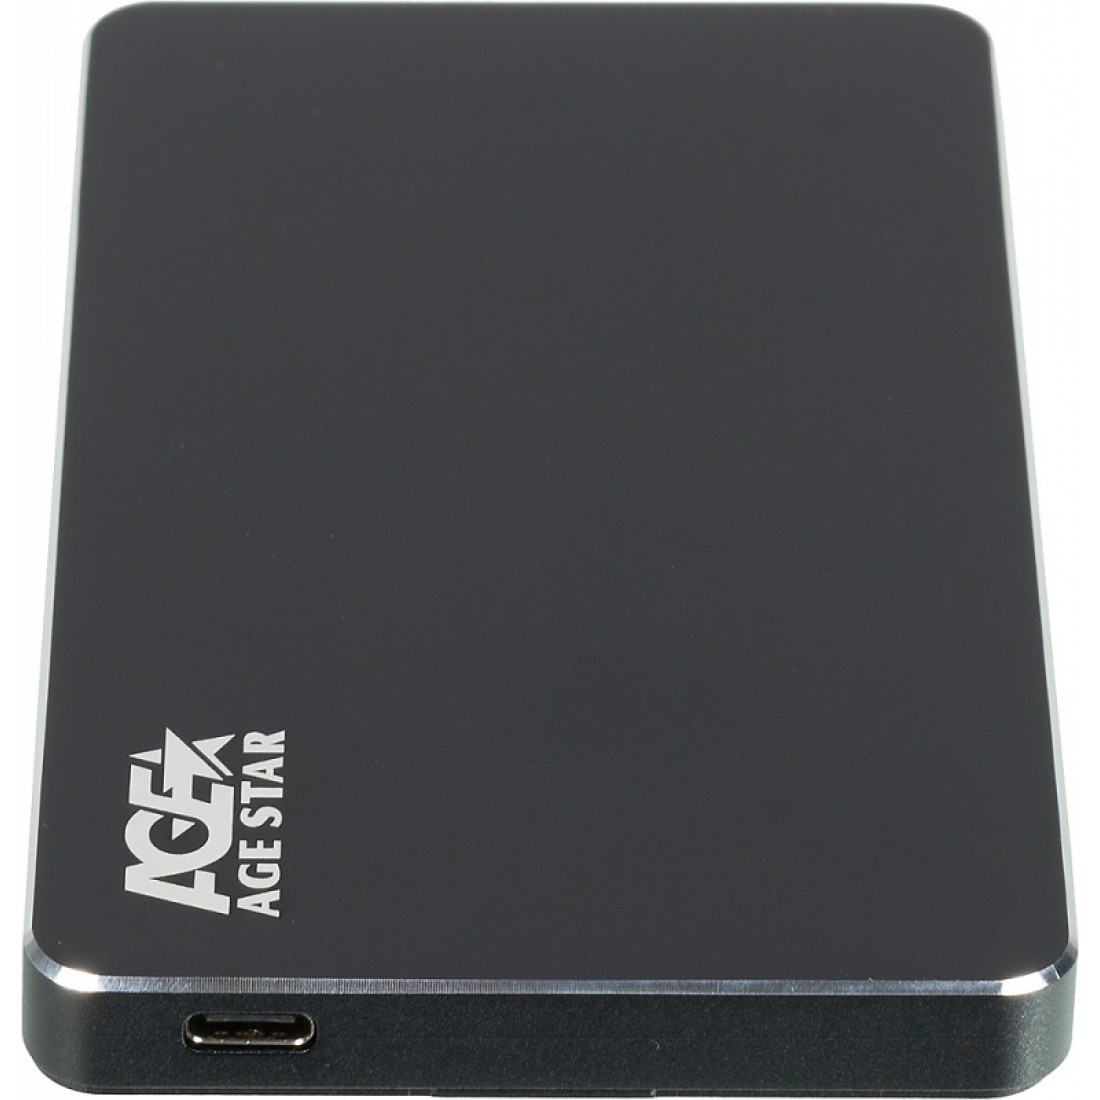 Внешний корпус для HDD/SSD AgeStar 3UB2AX2 SATA I/II/III алюминий черный 2.5 внешний корпус для hdd ssd agestar 3ub2p6c